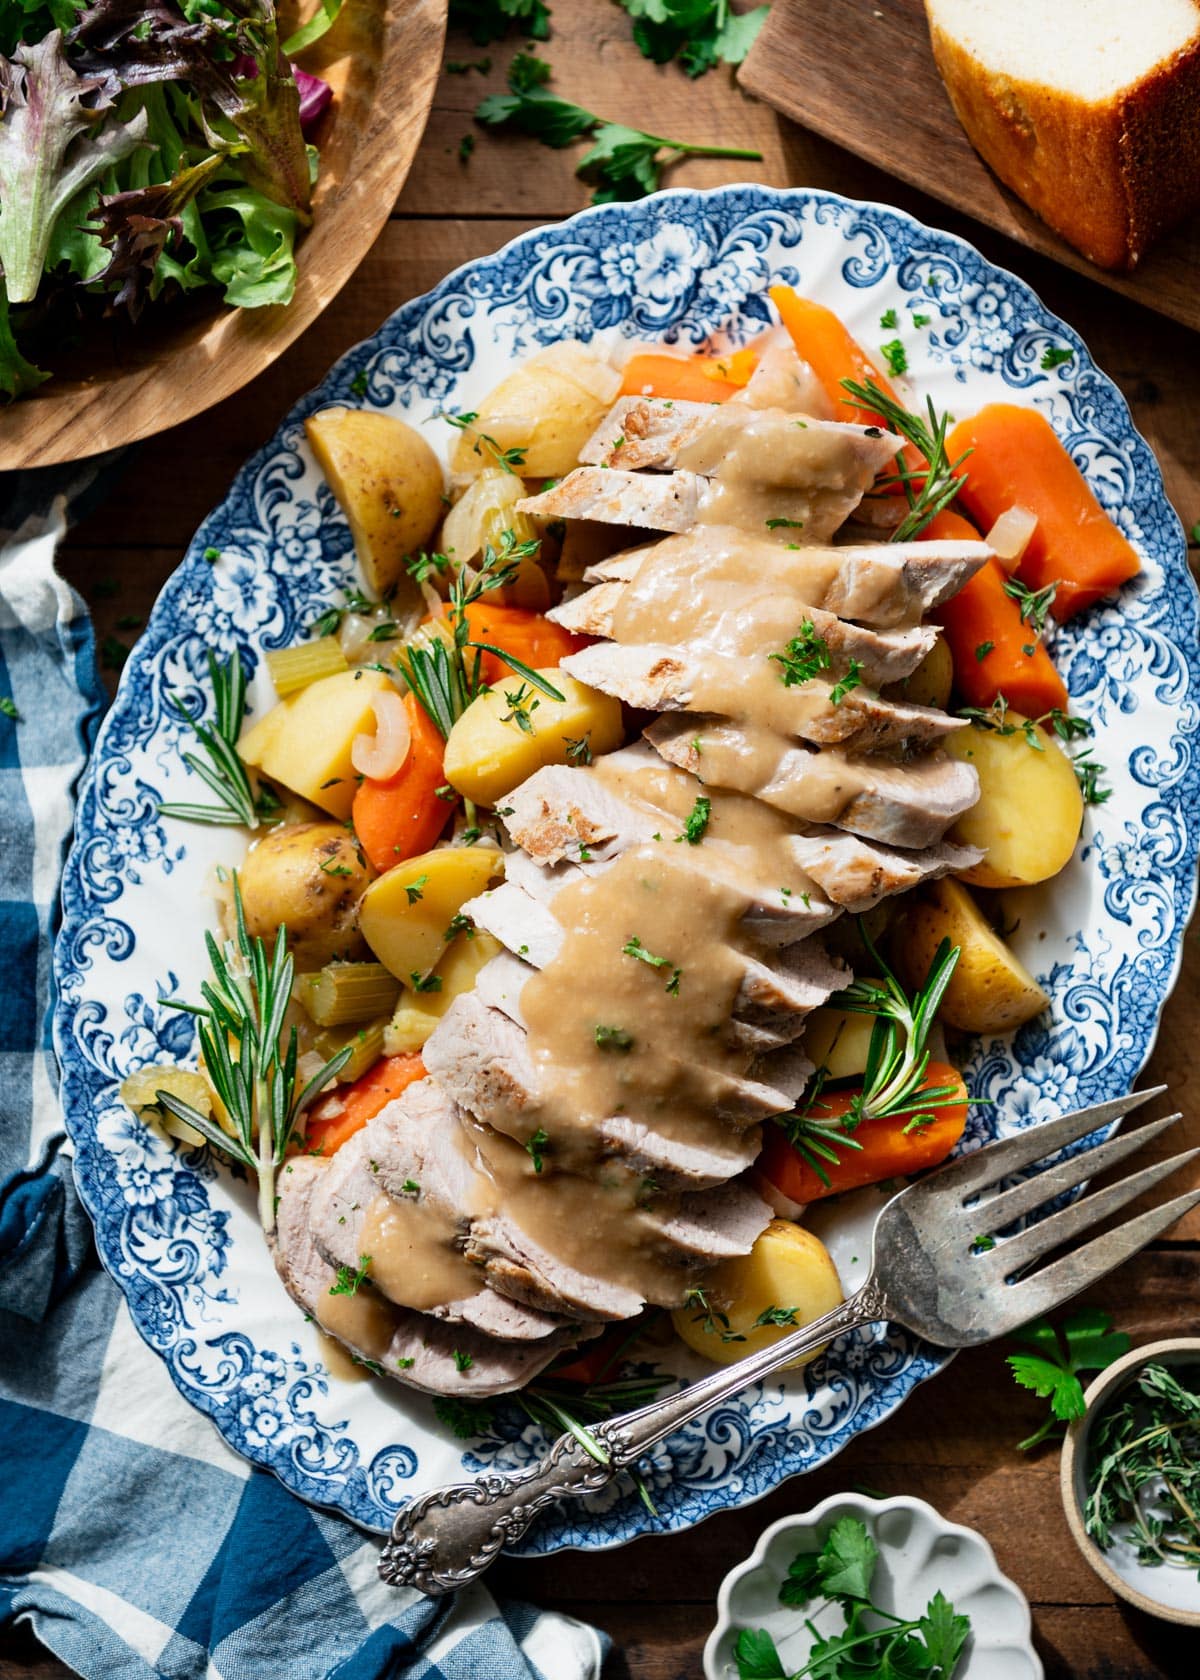 Overhead image of a serving platter full of Dutch oven pork tenderloin with vegetables and gravy.